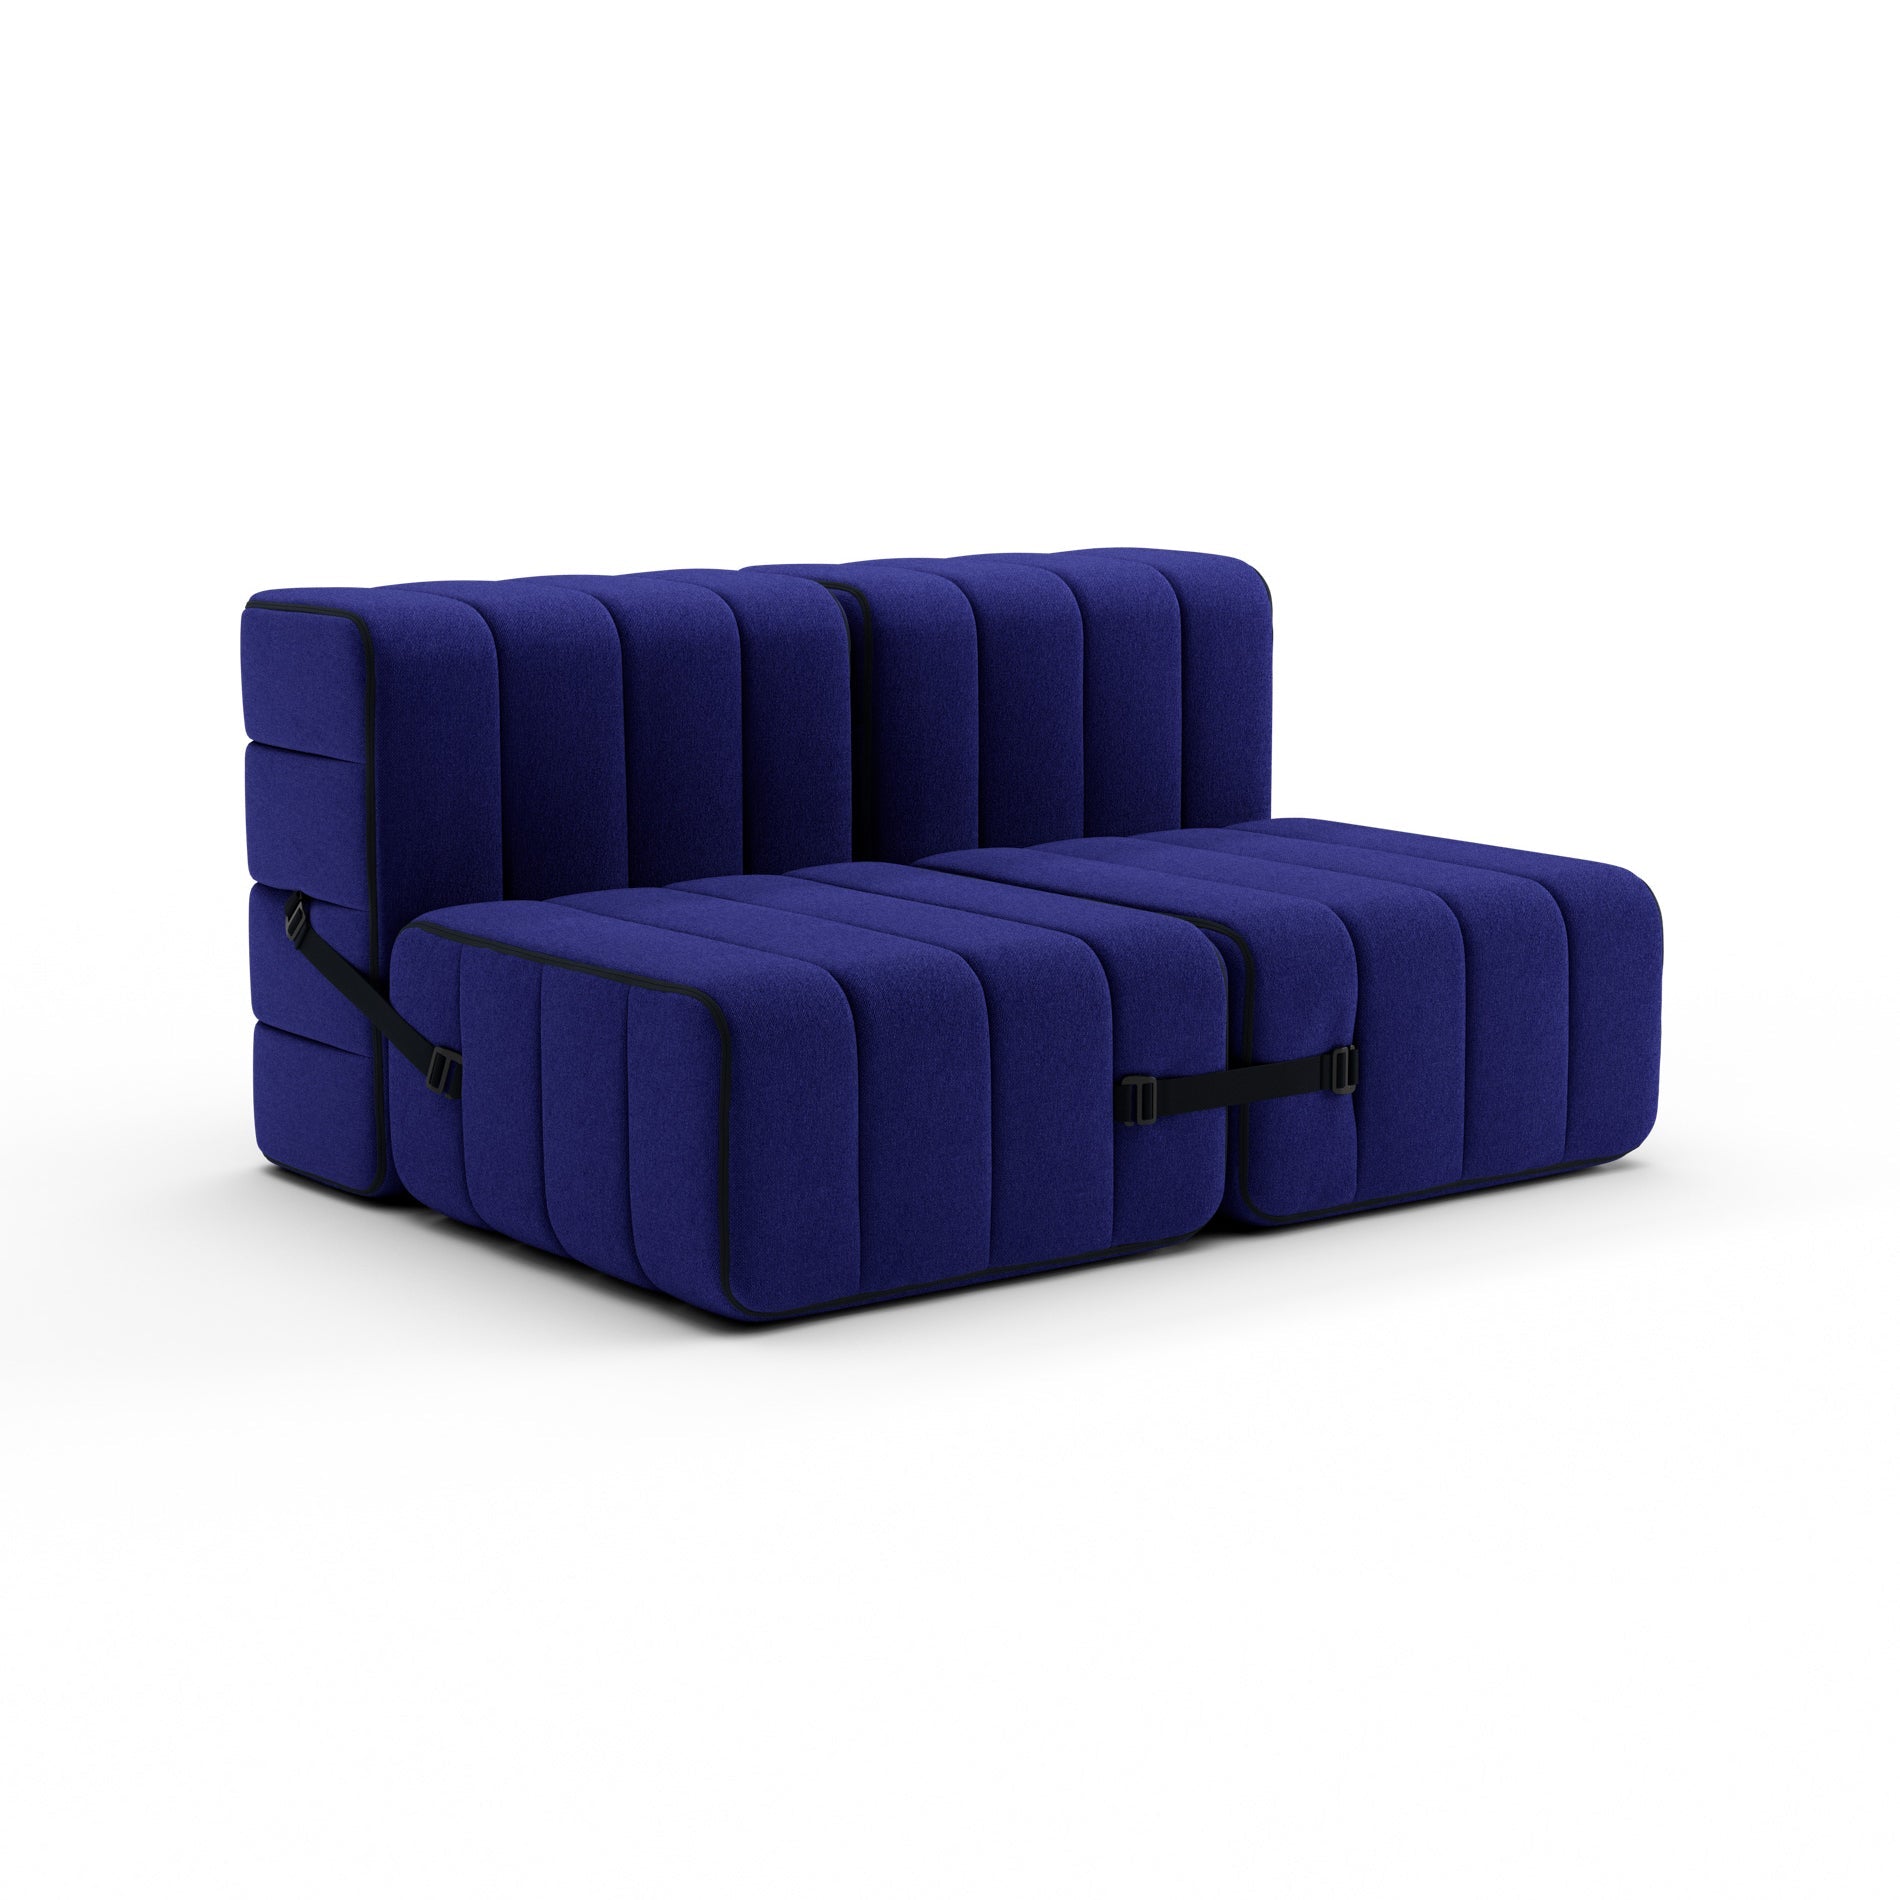 Curt Sofa System - Jet Blue Violett Sofa Ambivalenz